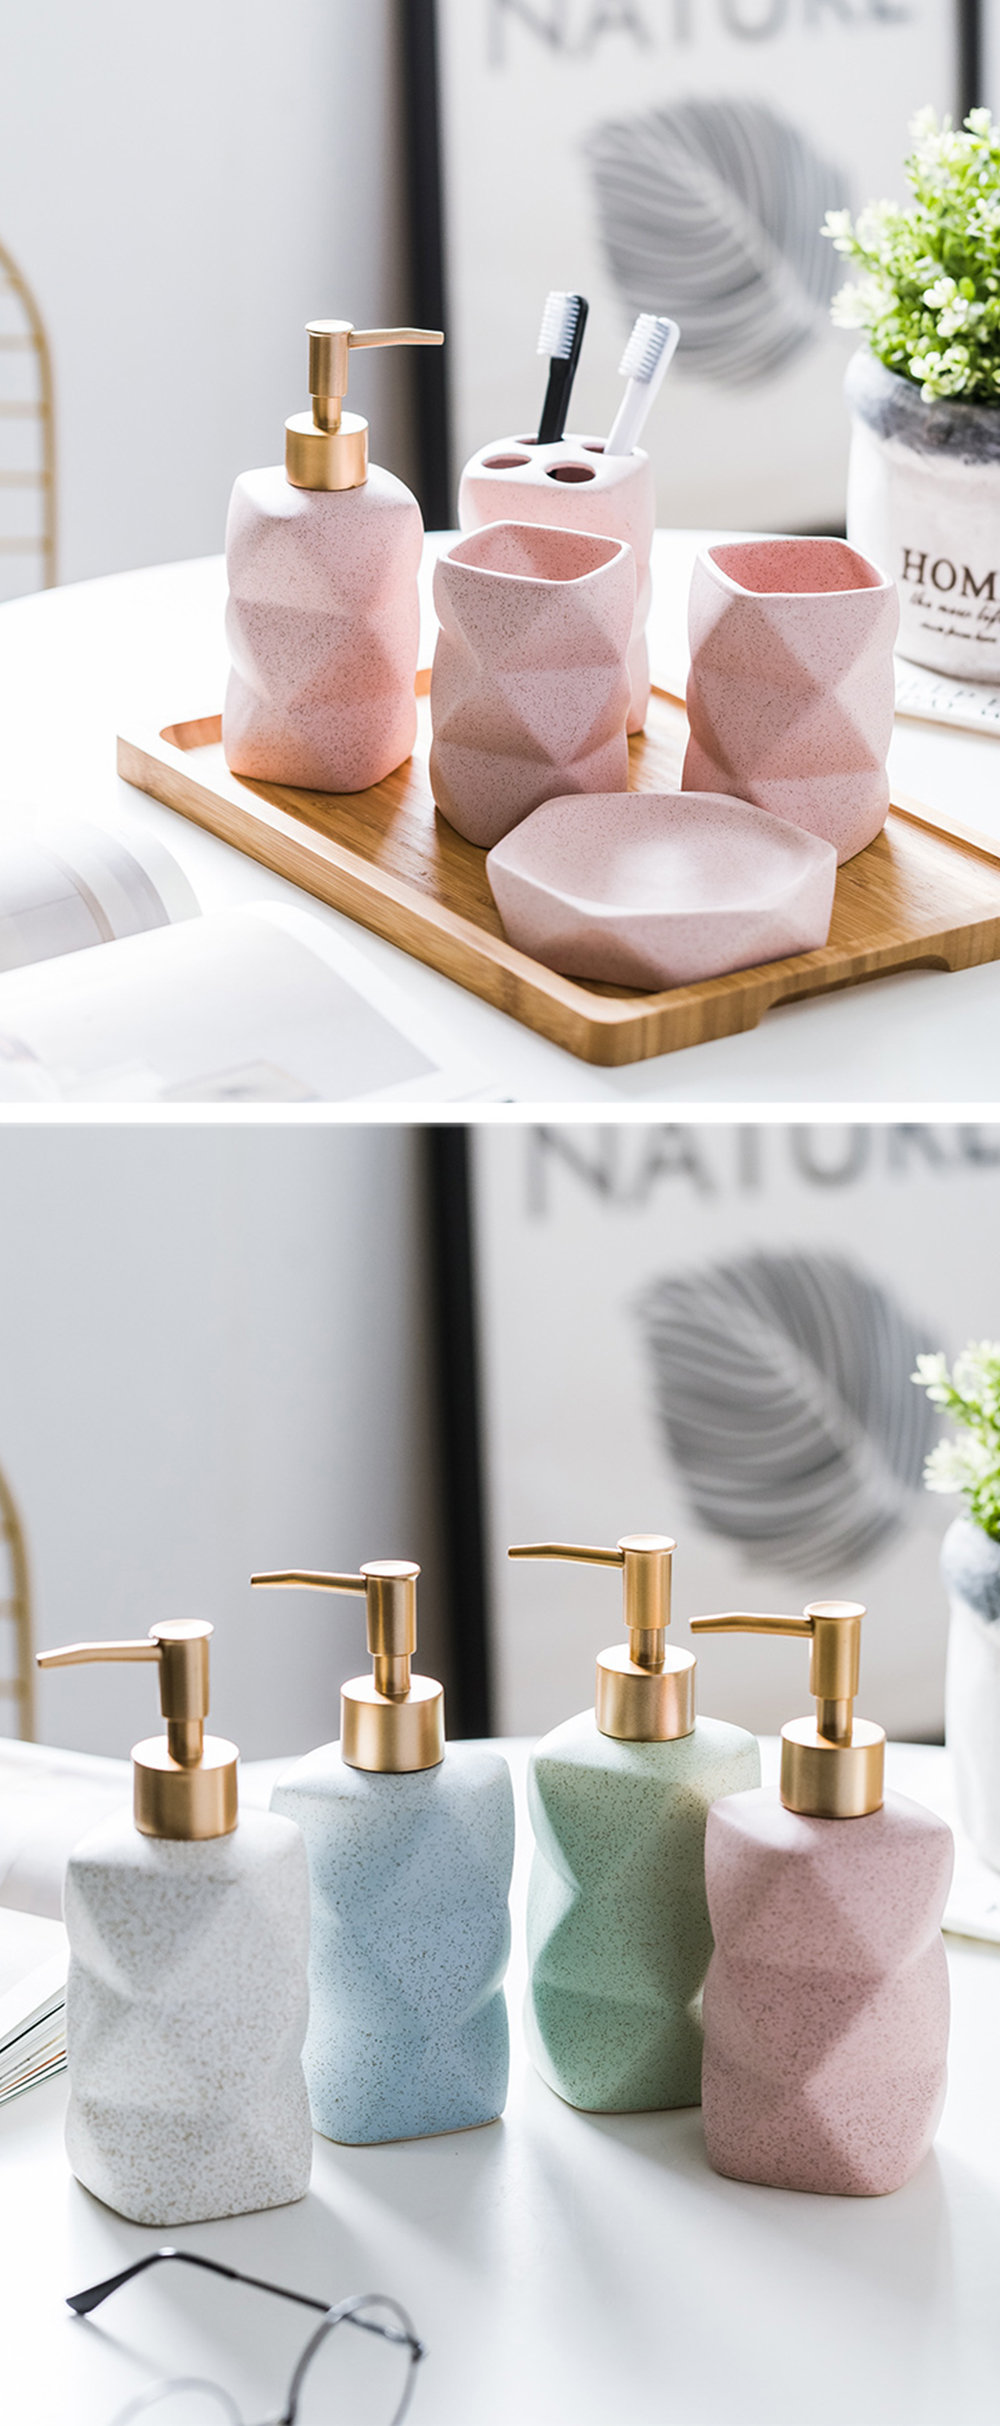 The Natural Ceramic Bath Accessories